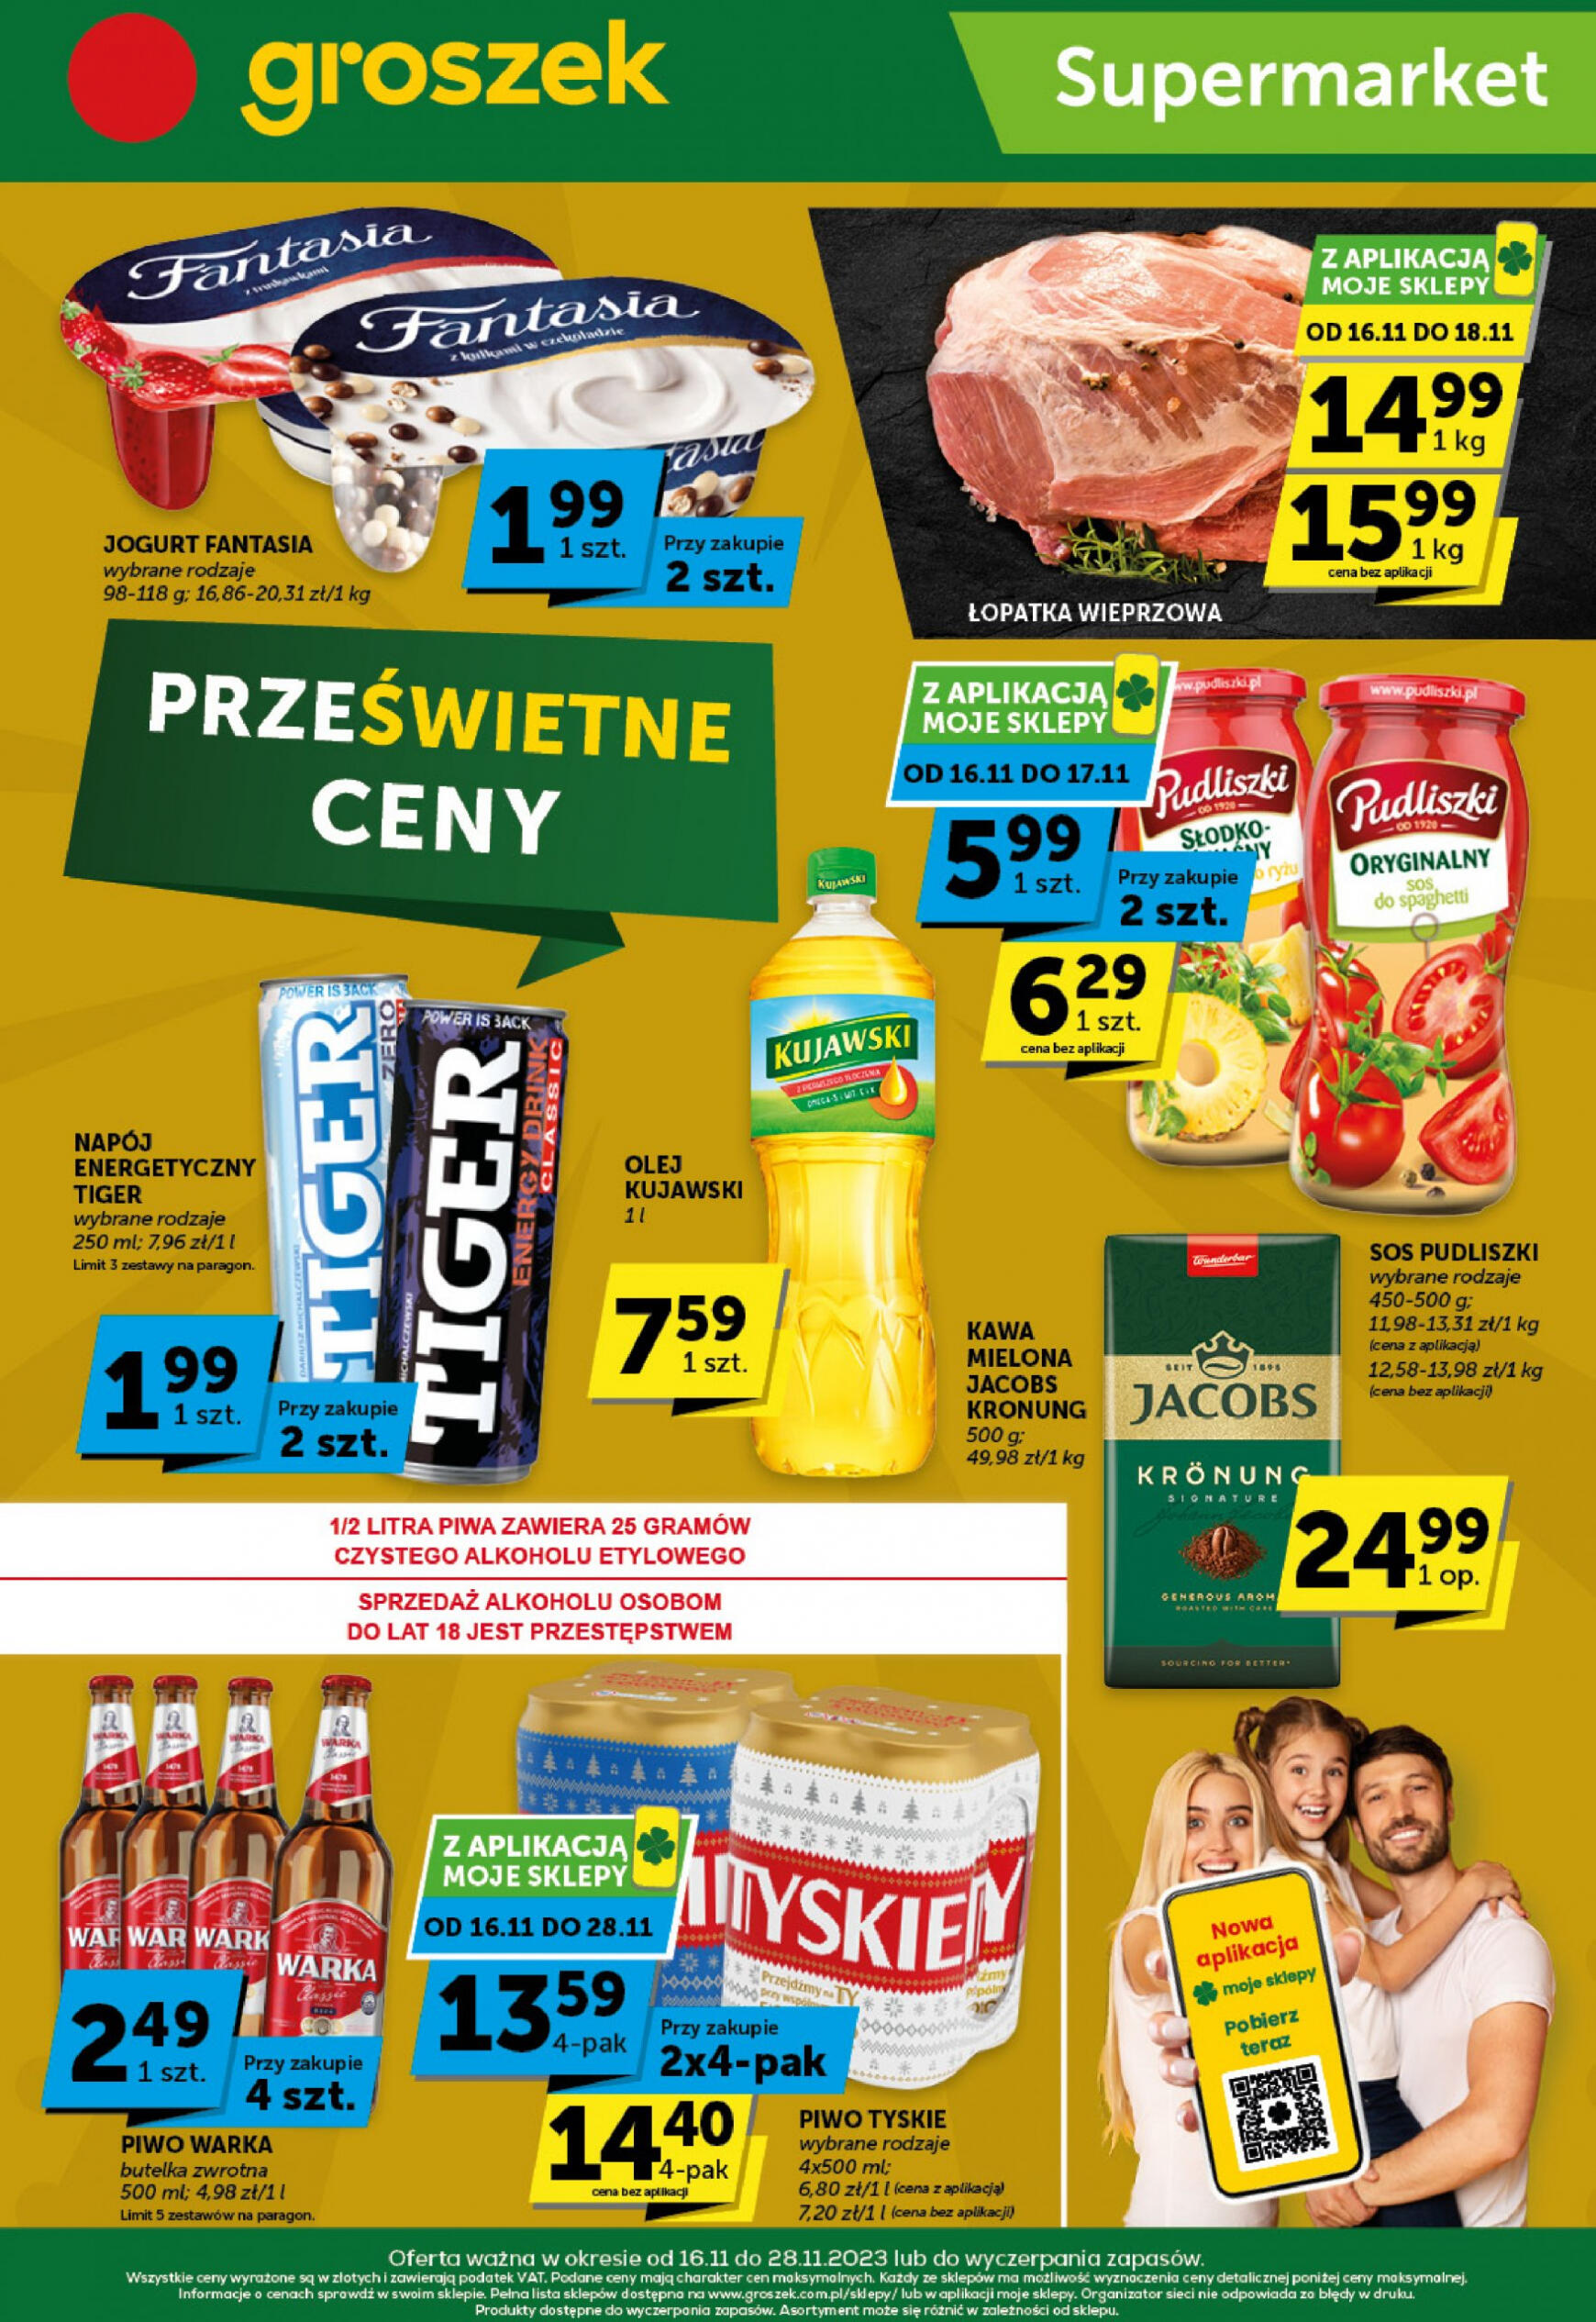 groszek - Groszek Supermarket